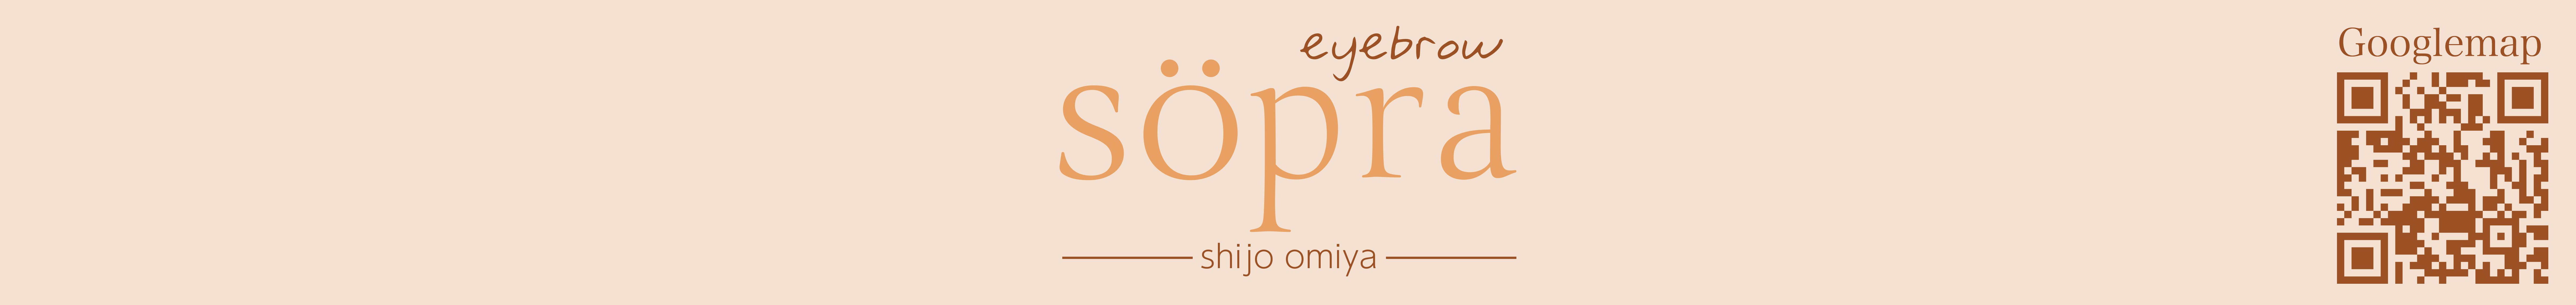 eyebrow söpra shijo omiya logo